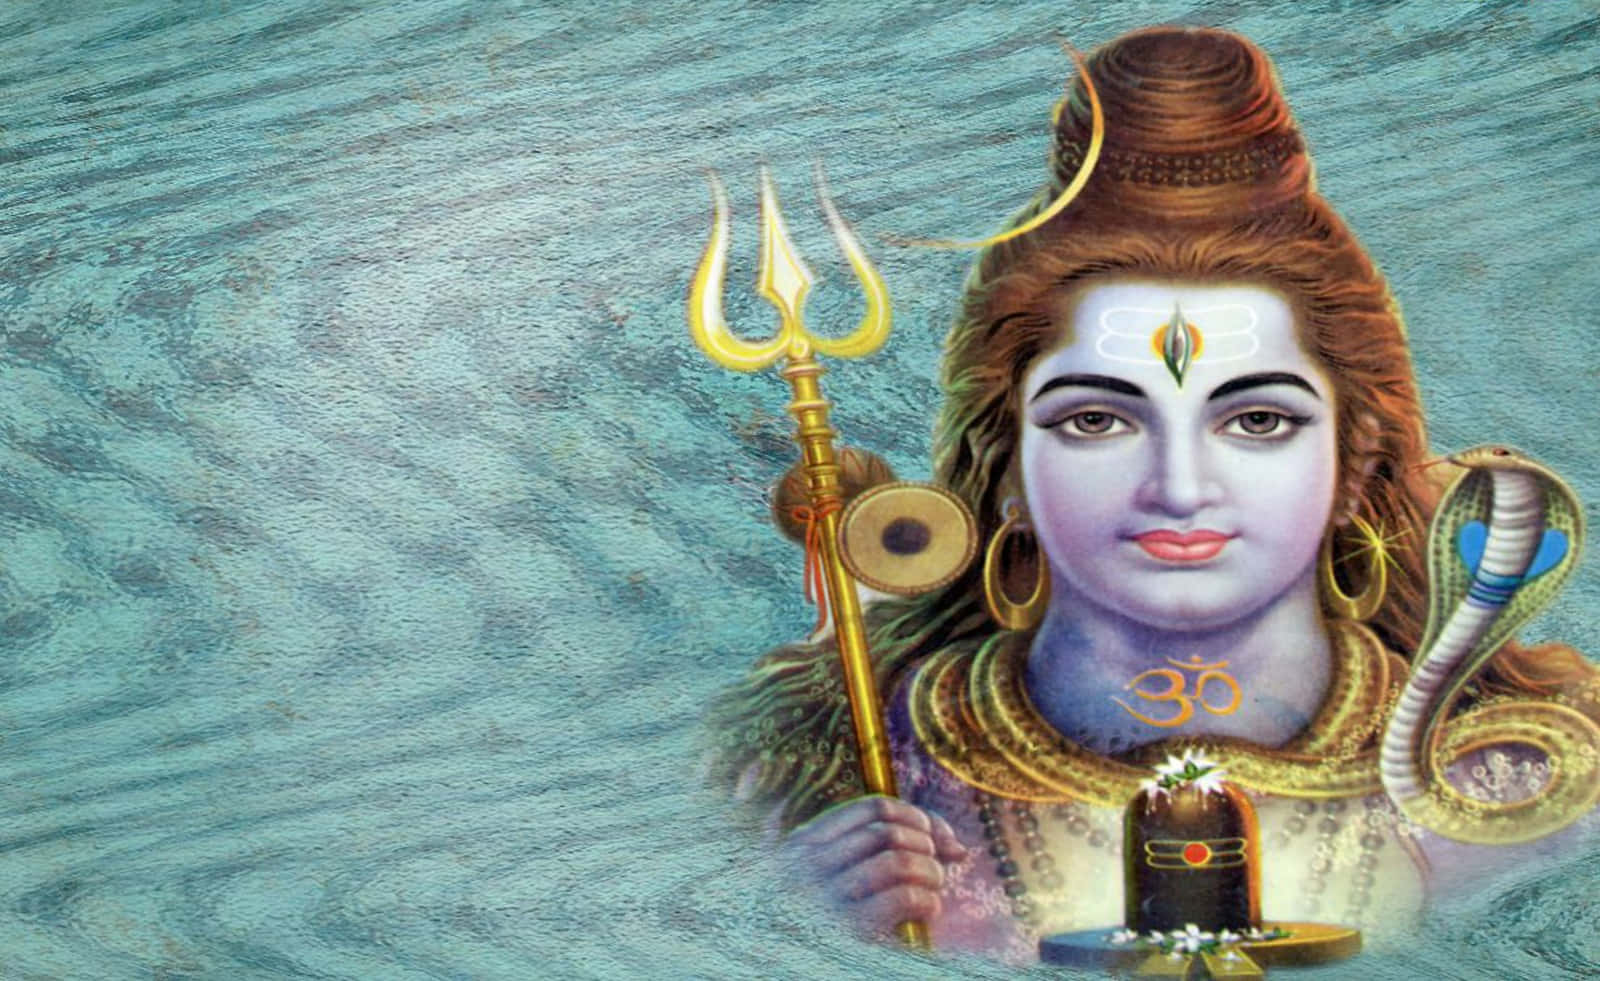 Hengivenhedtil Herren Shiva, Universets Herre.